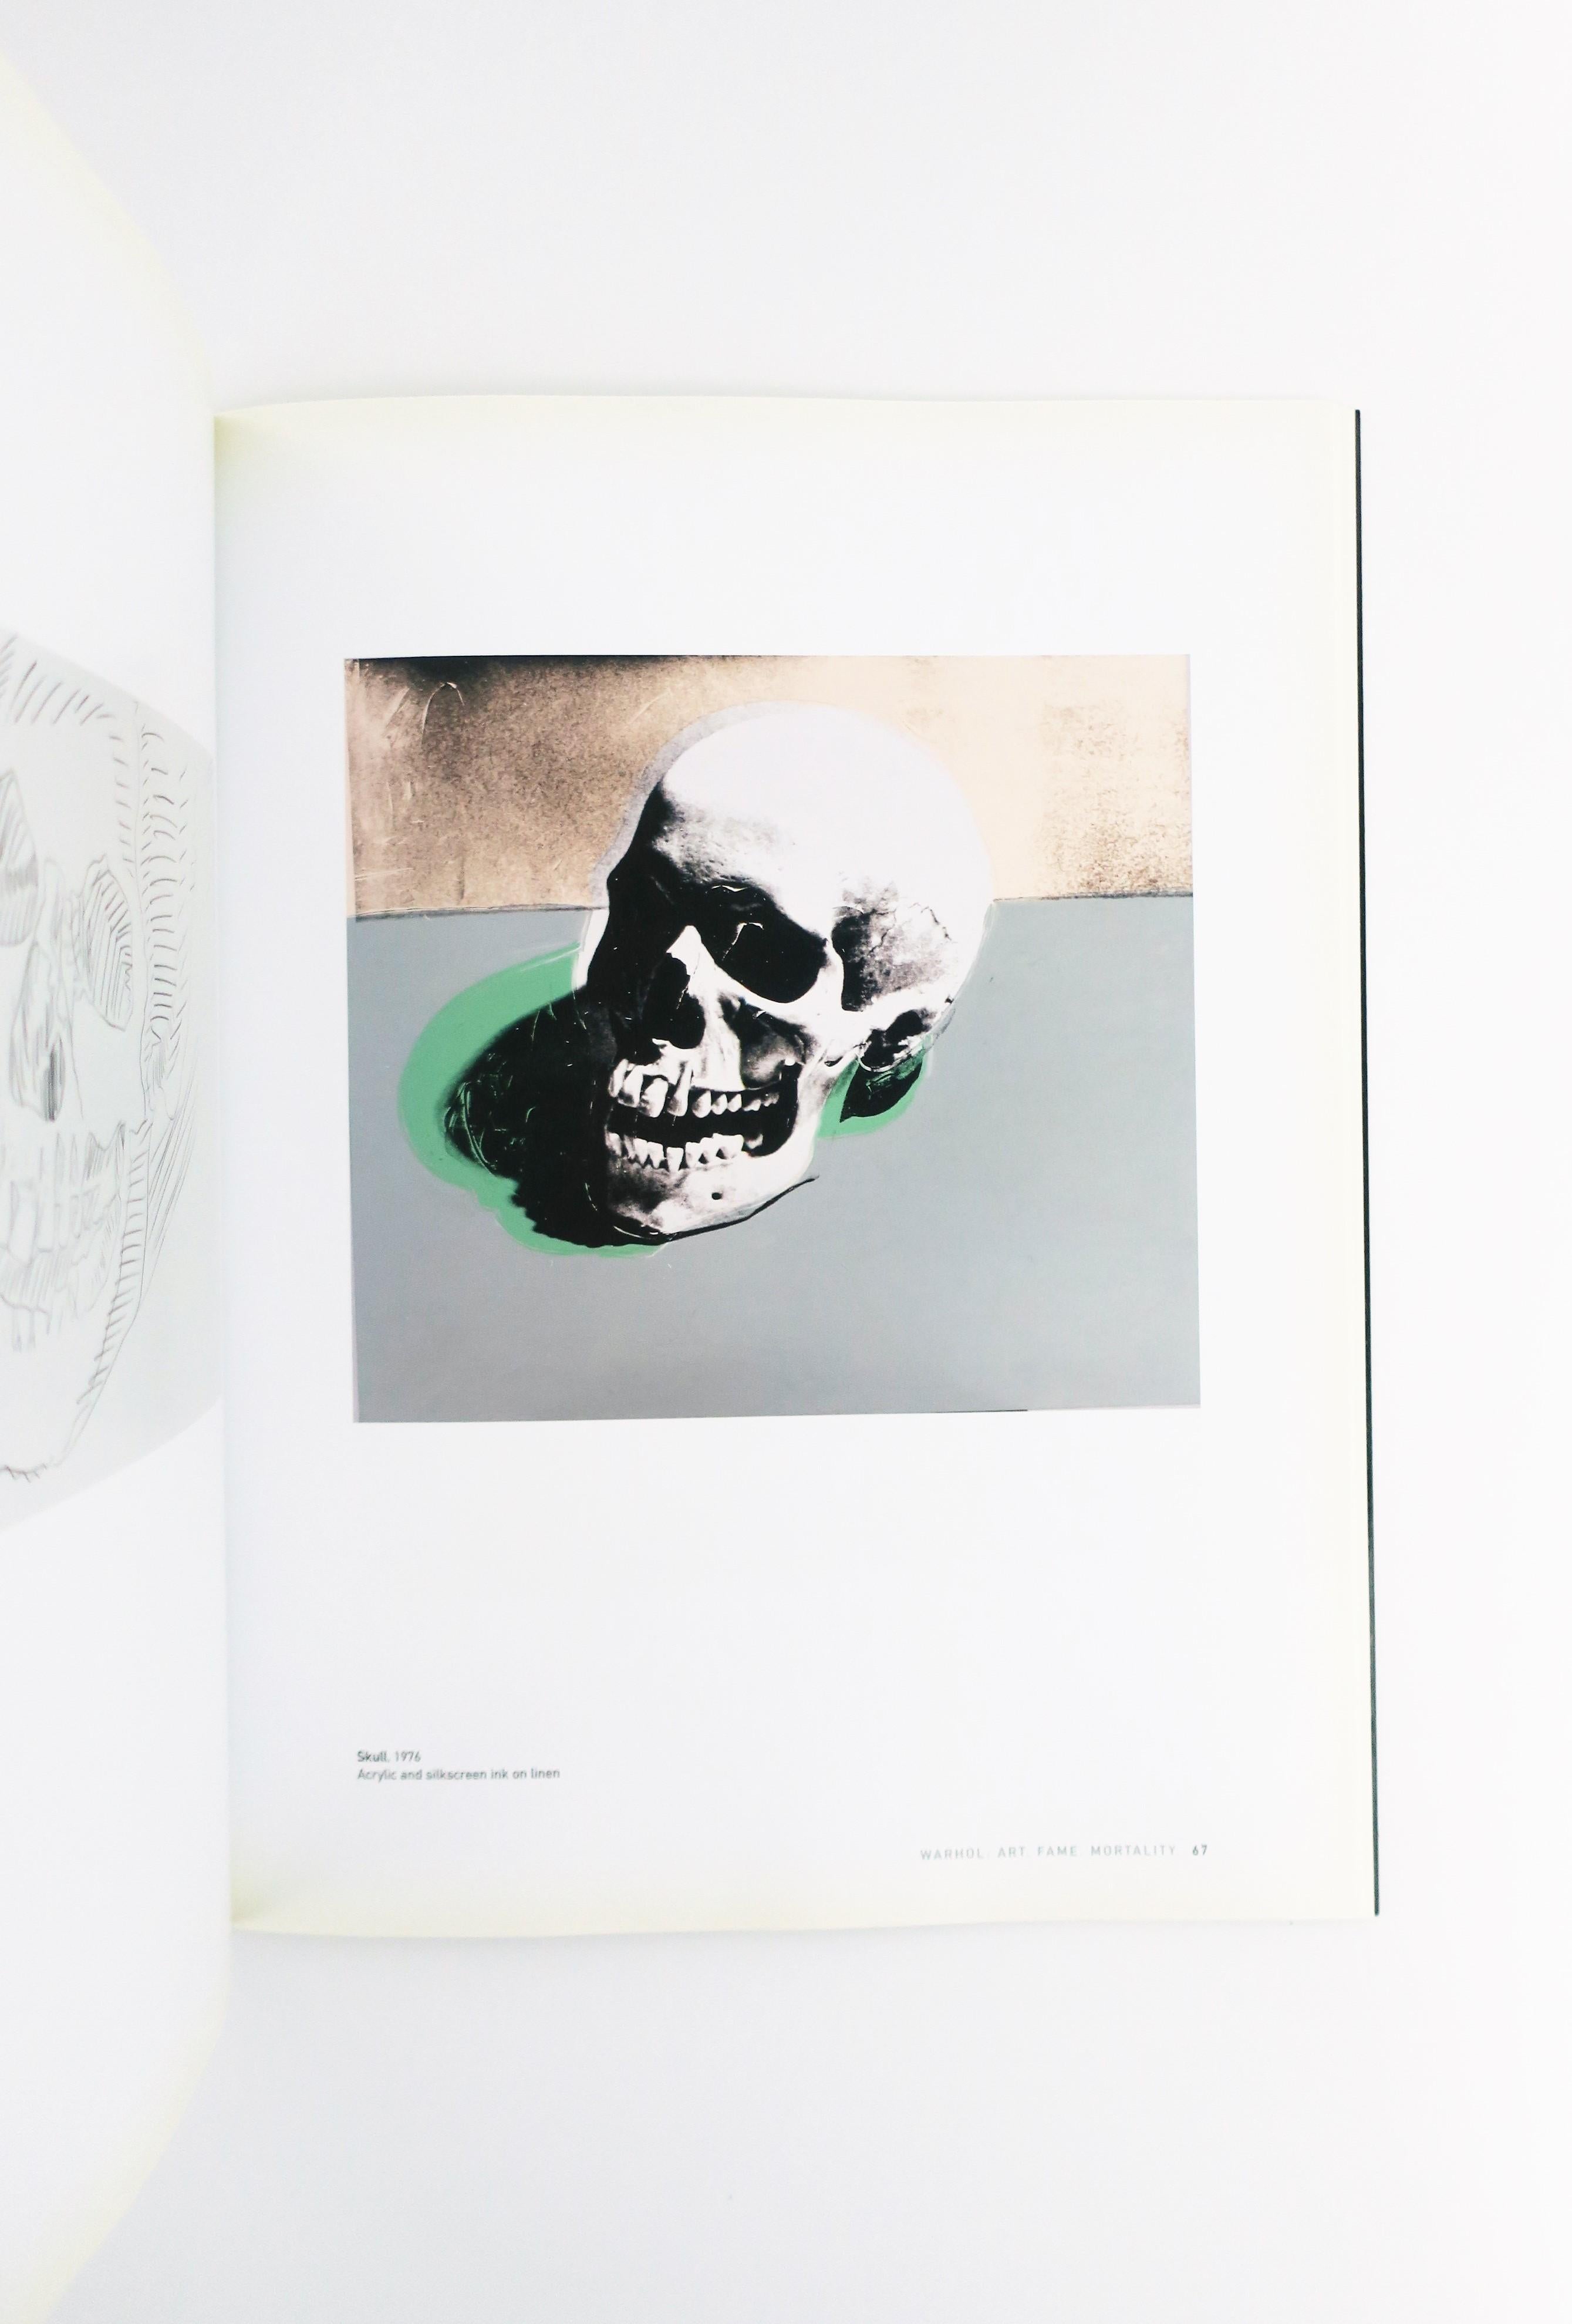 Warhol Art, Fame, Mortality, Exhibition Book 4